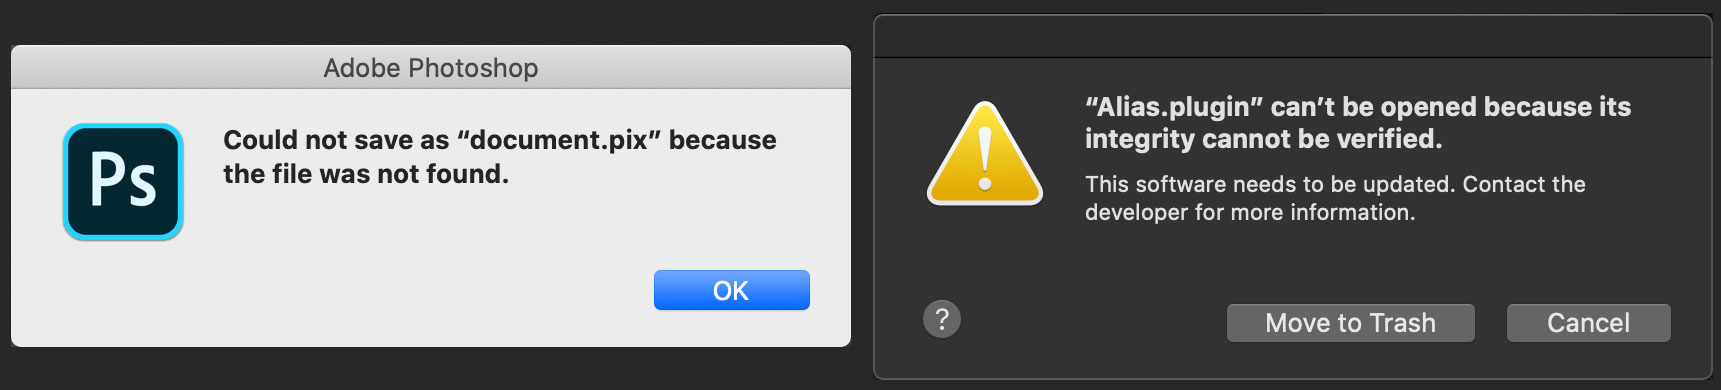 photoshop cc 2014 crashes when saving for web mac